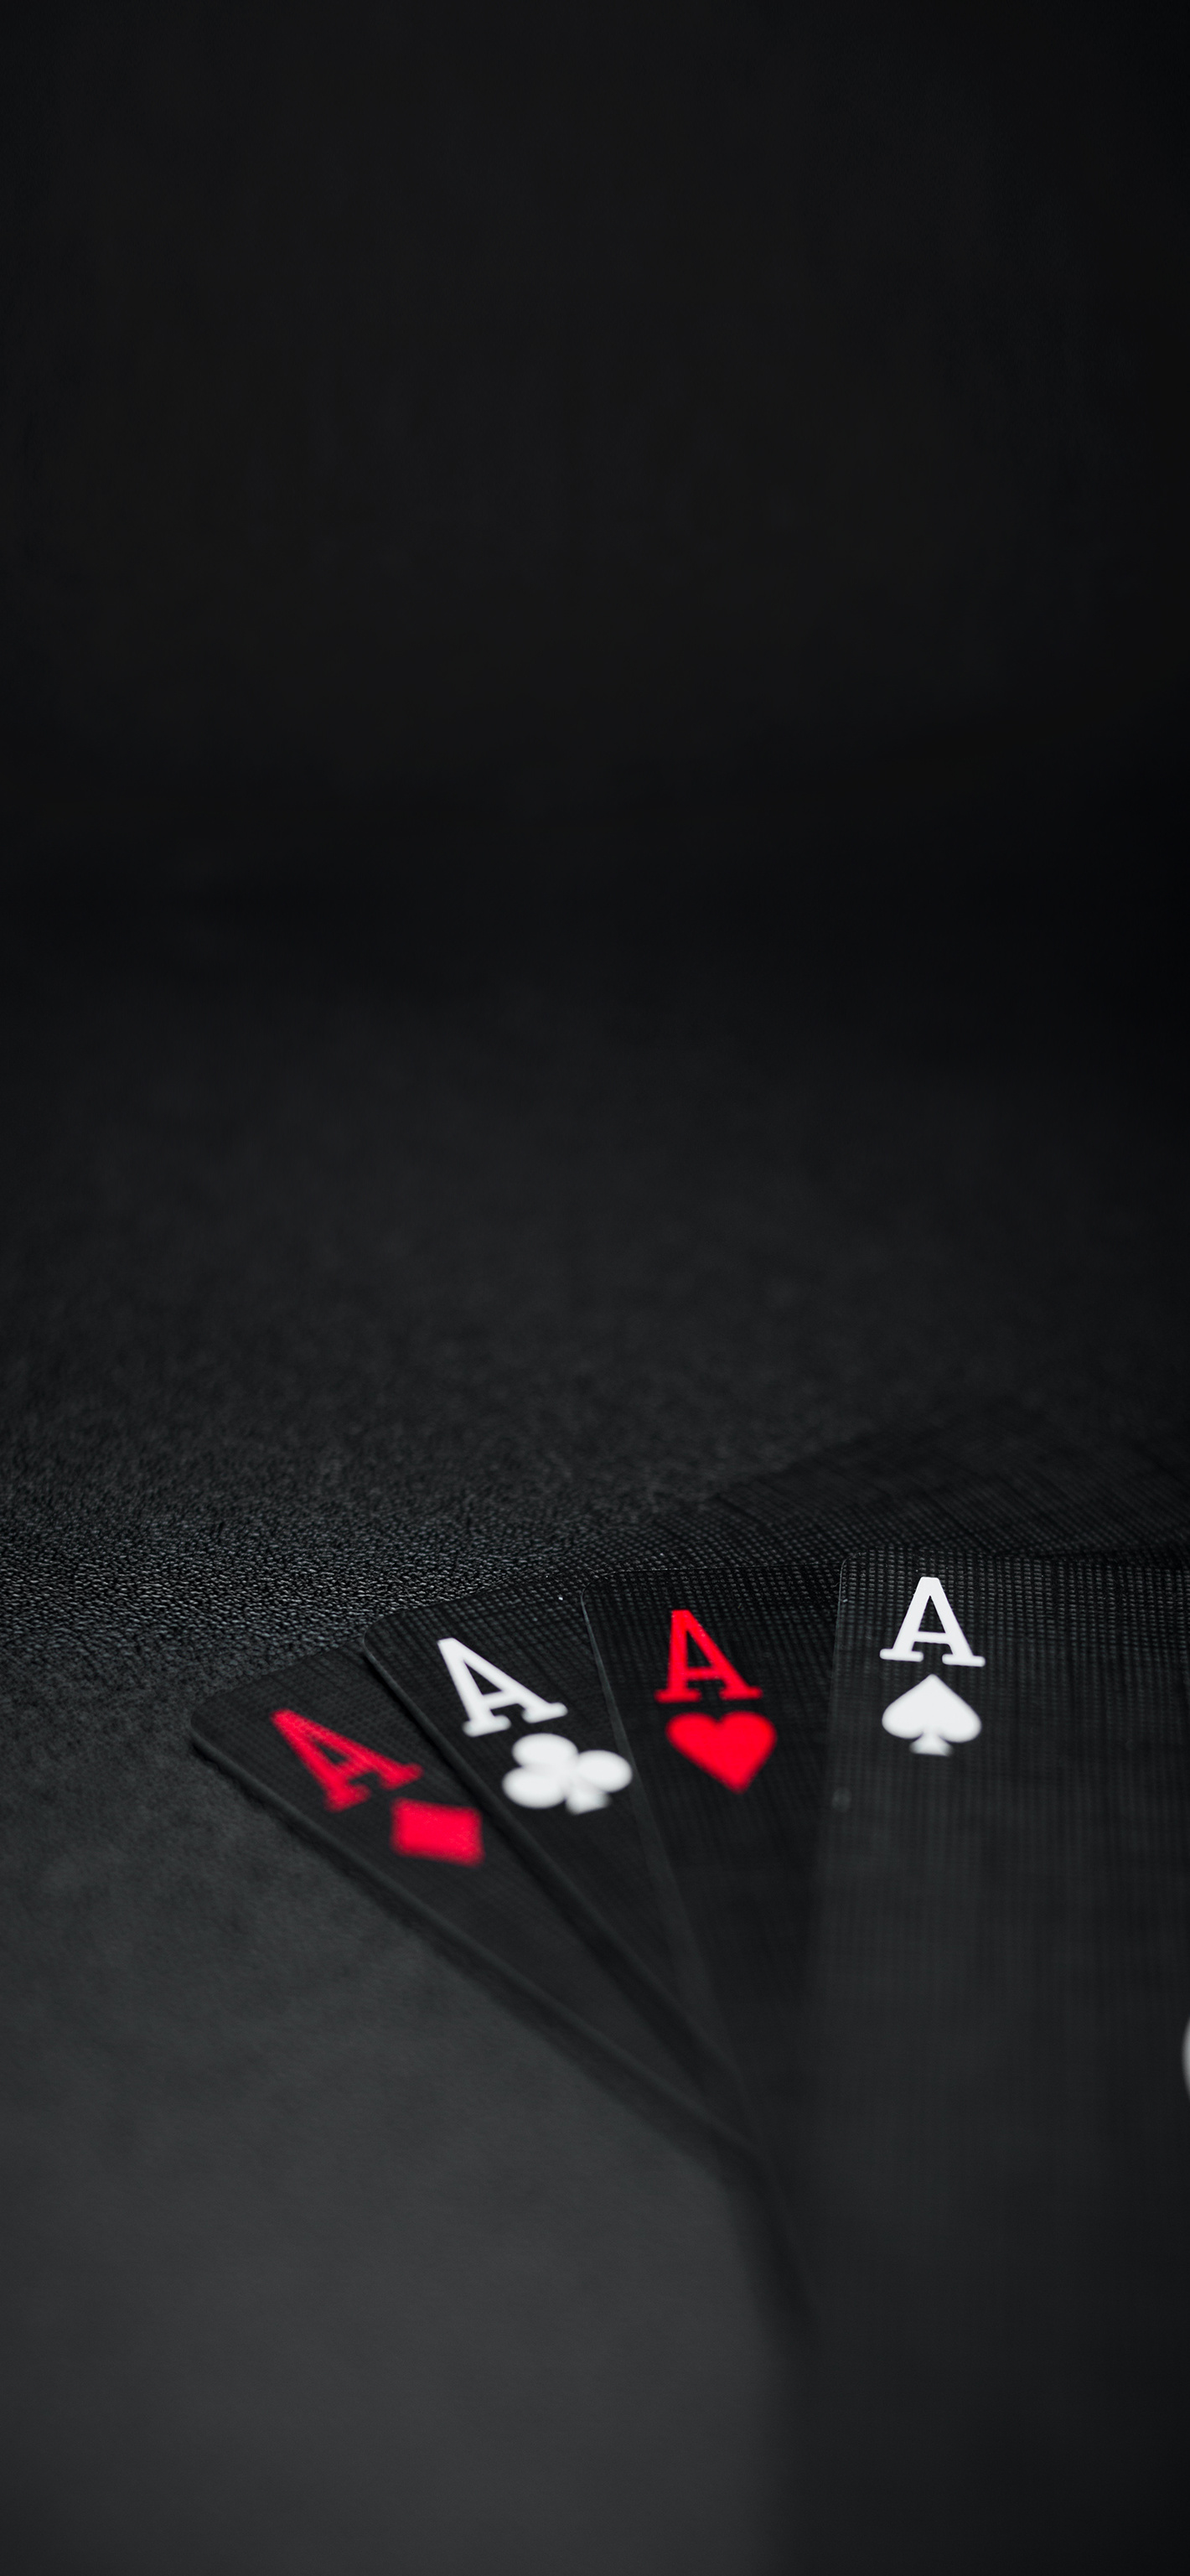 Poker: Black, Ace, AAAA, The highest card, Spades, Hearts, Diamonds, Clubs. 1420x3080 HD Wallpaper.